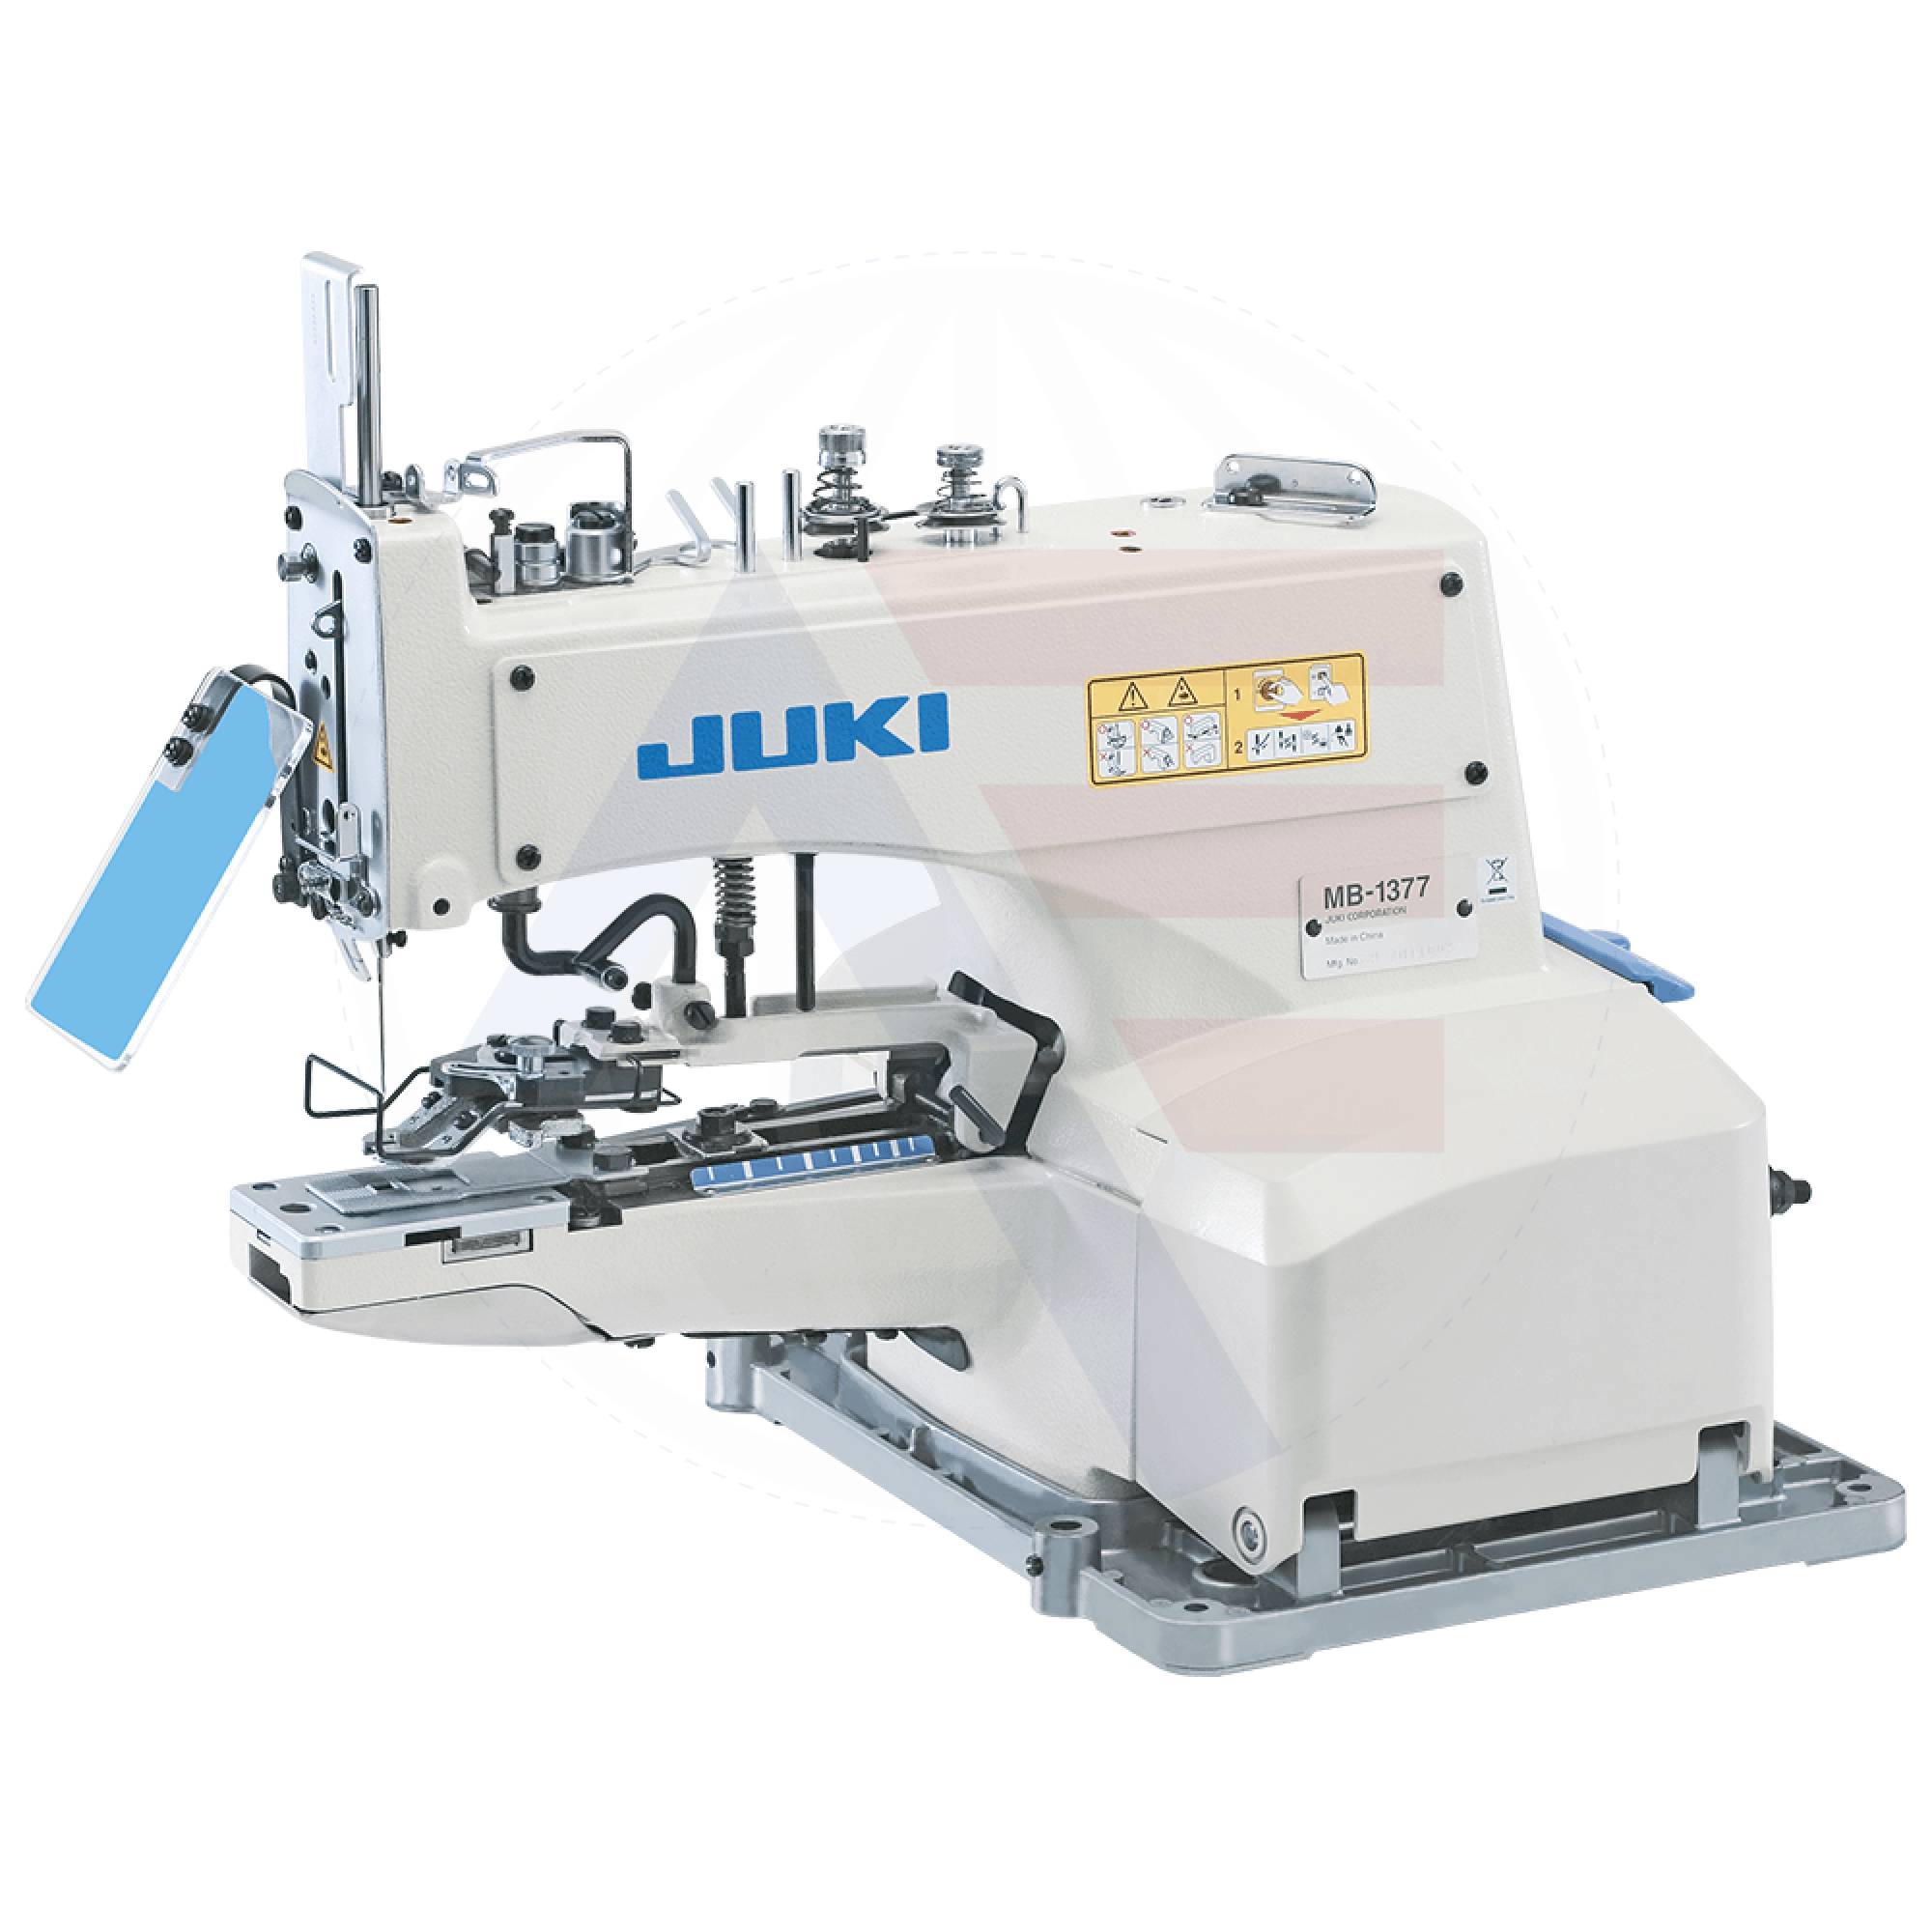 Juki Mb-1370 Button Sewer Sewing Machines